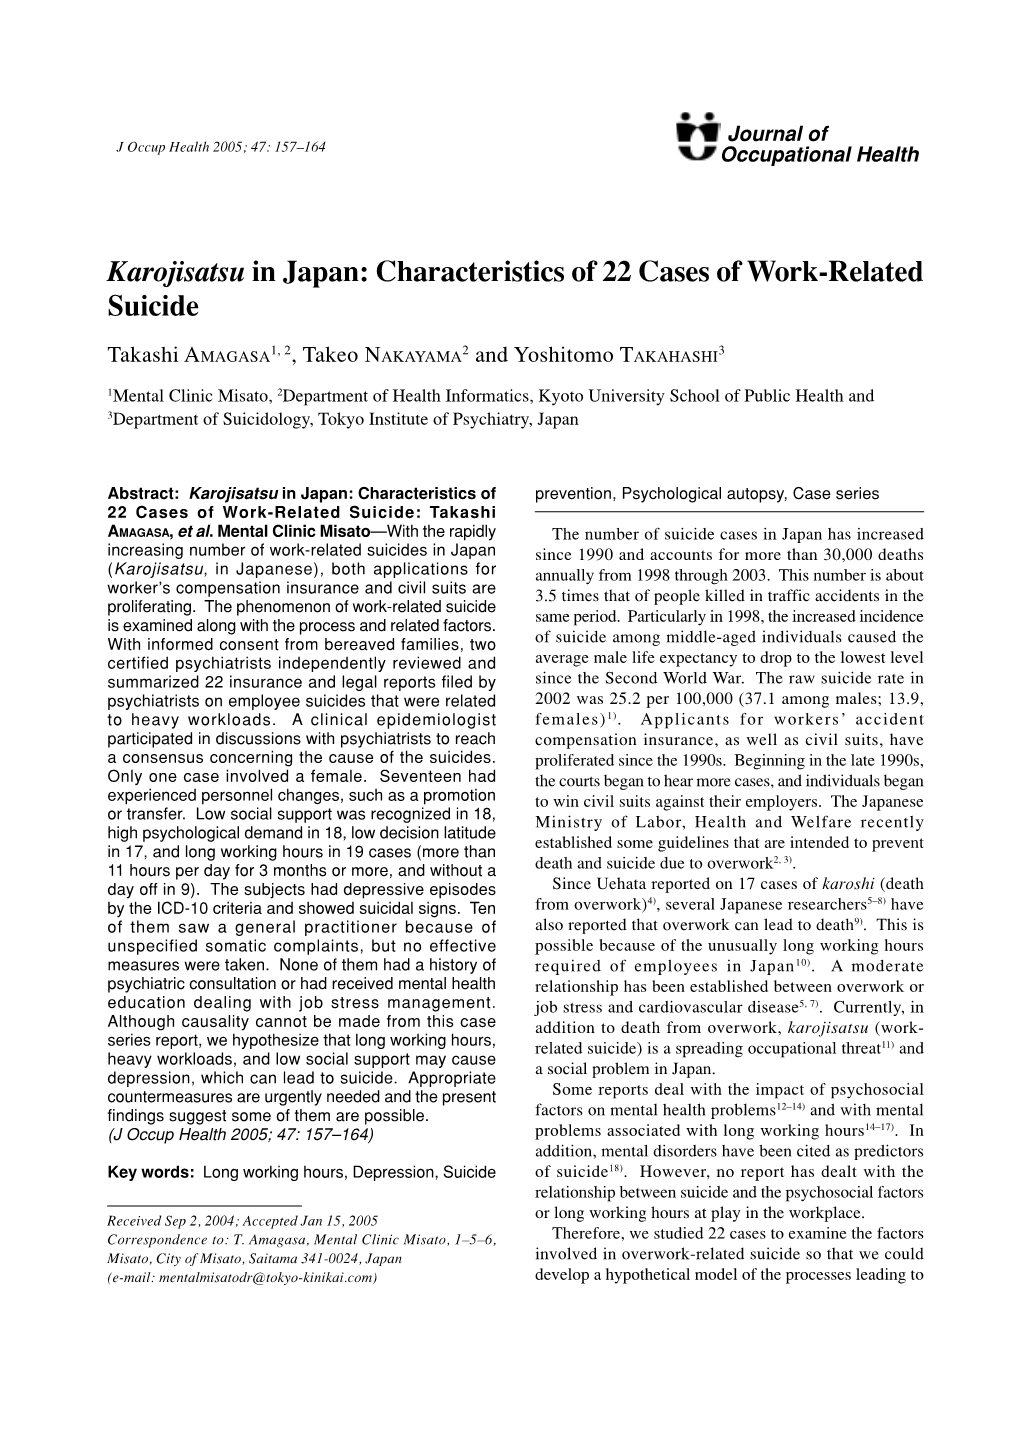 Karojisatsu in Japan: Characteristics of 22 Cases of Work-Related Suicide